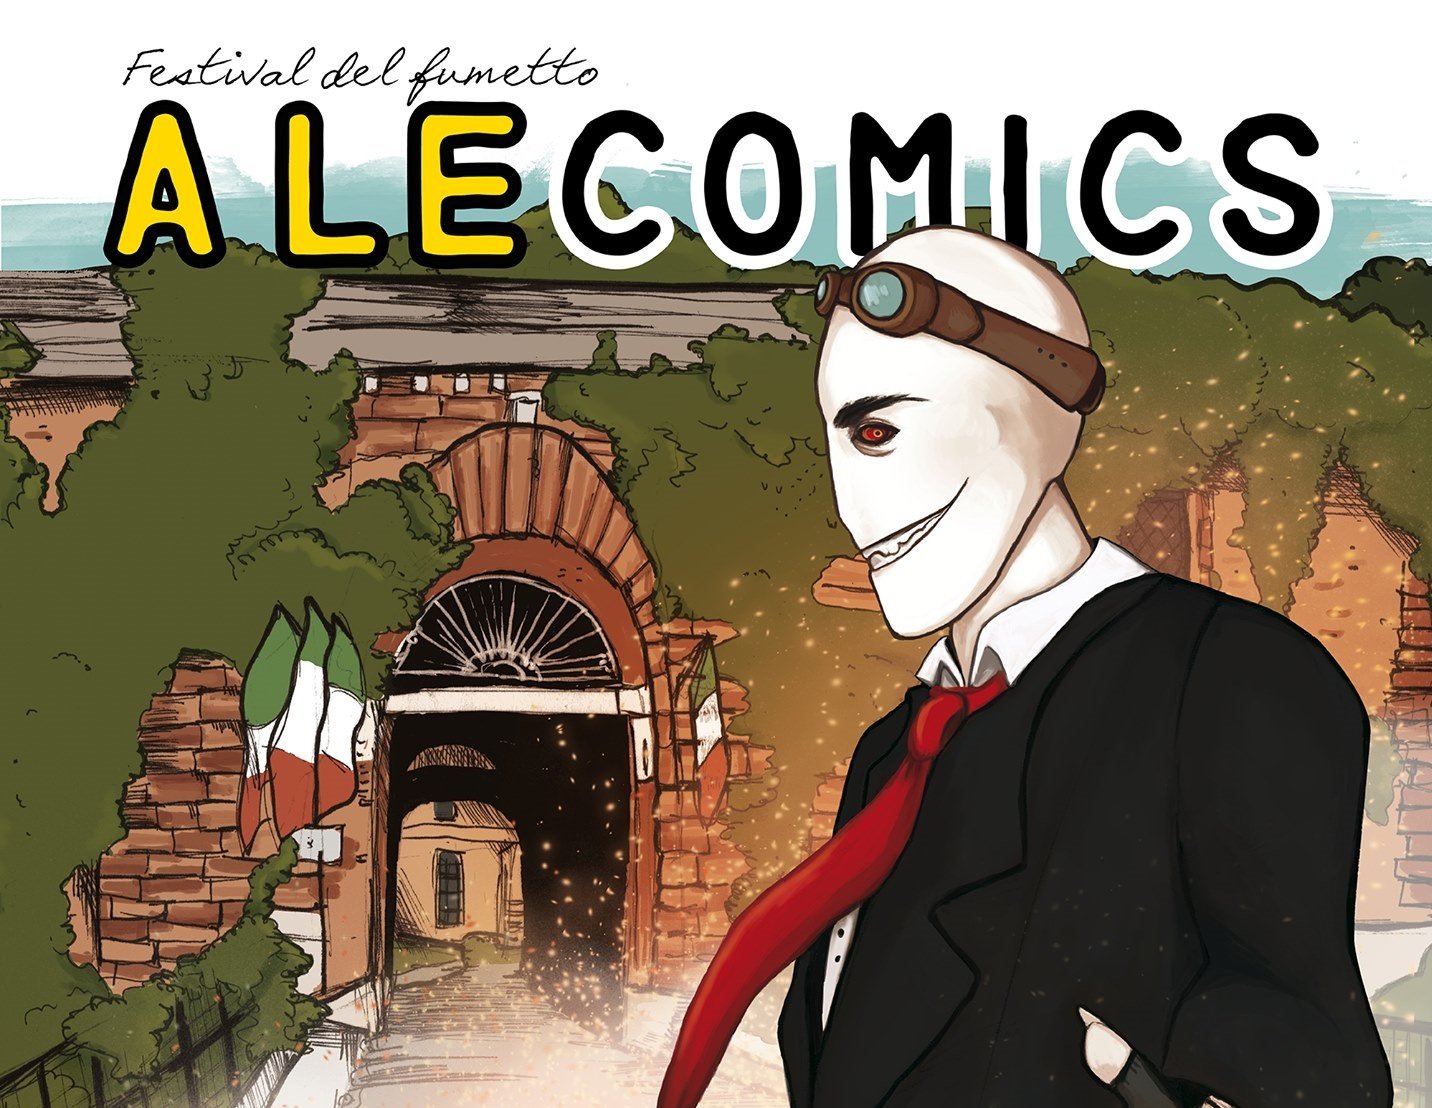 ALEcomics torna a settembre 2020 alla Cittadella di Alessandria